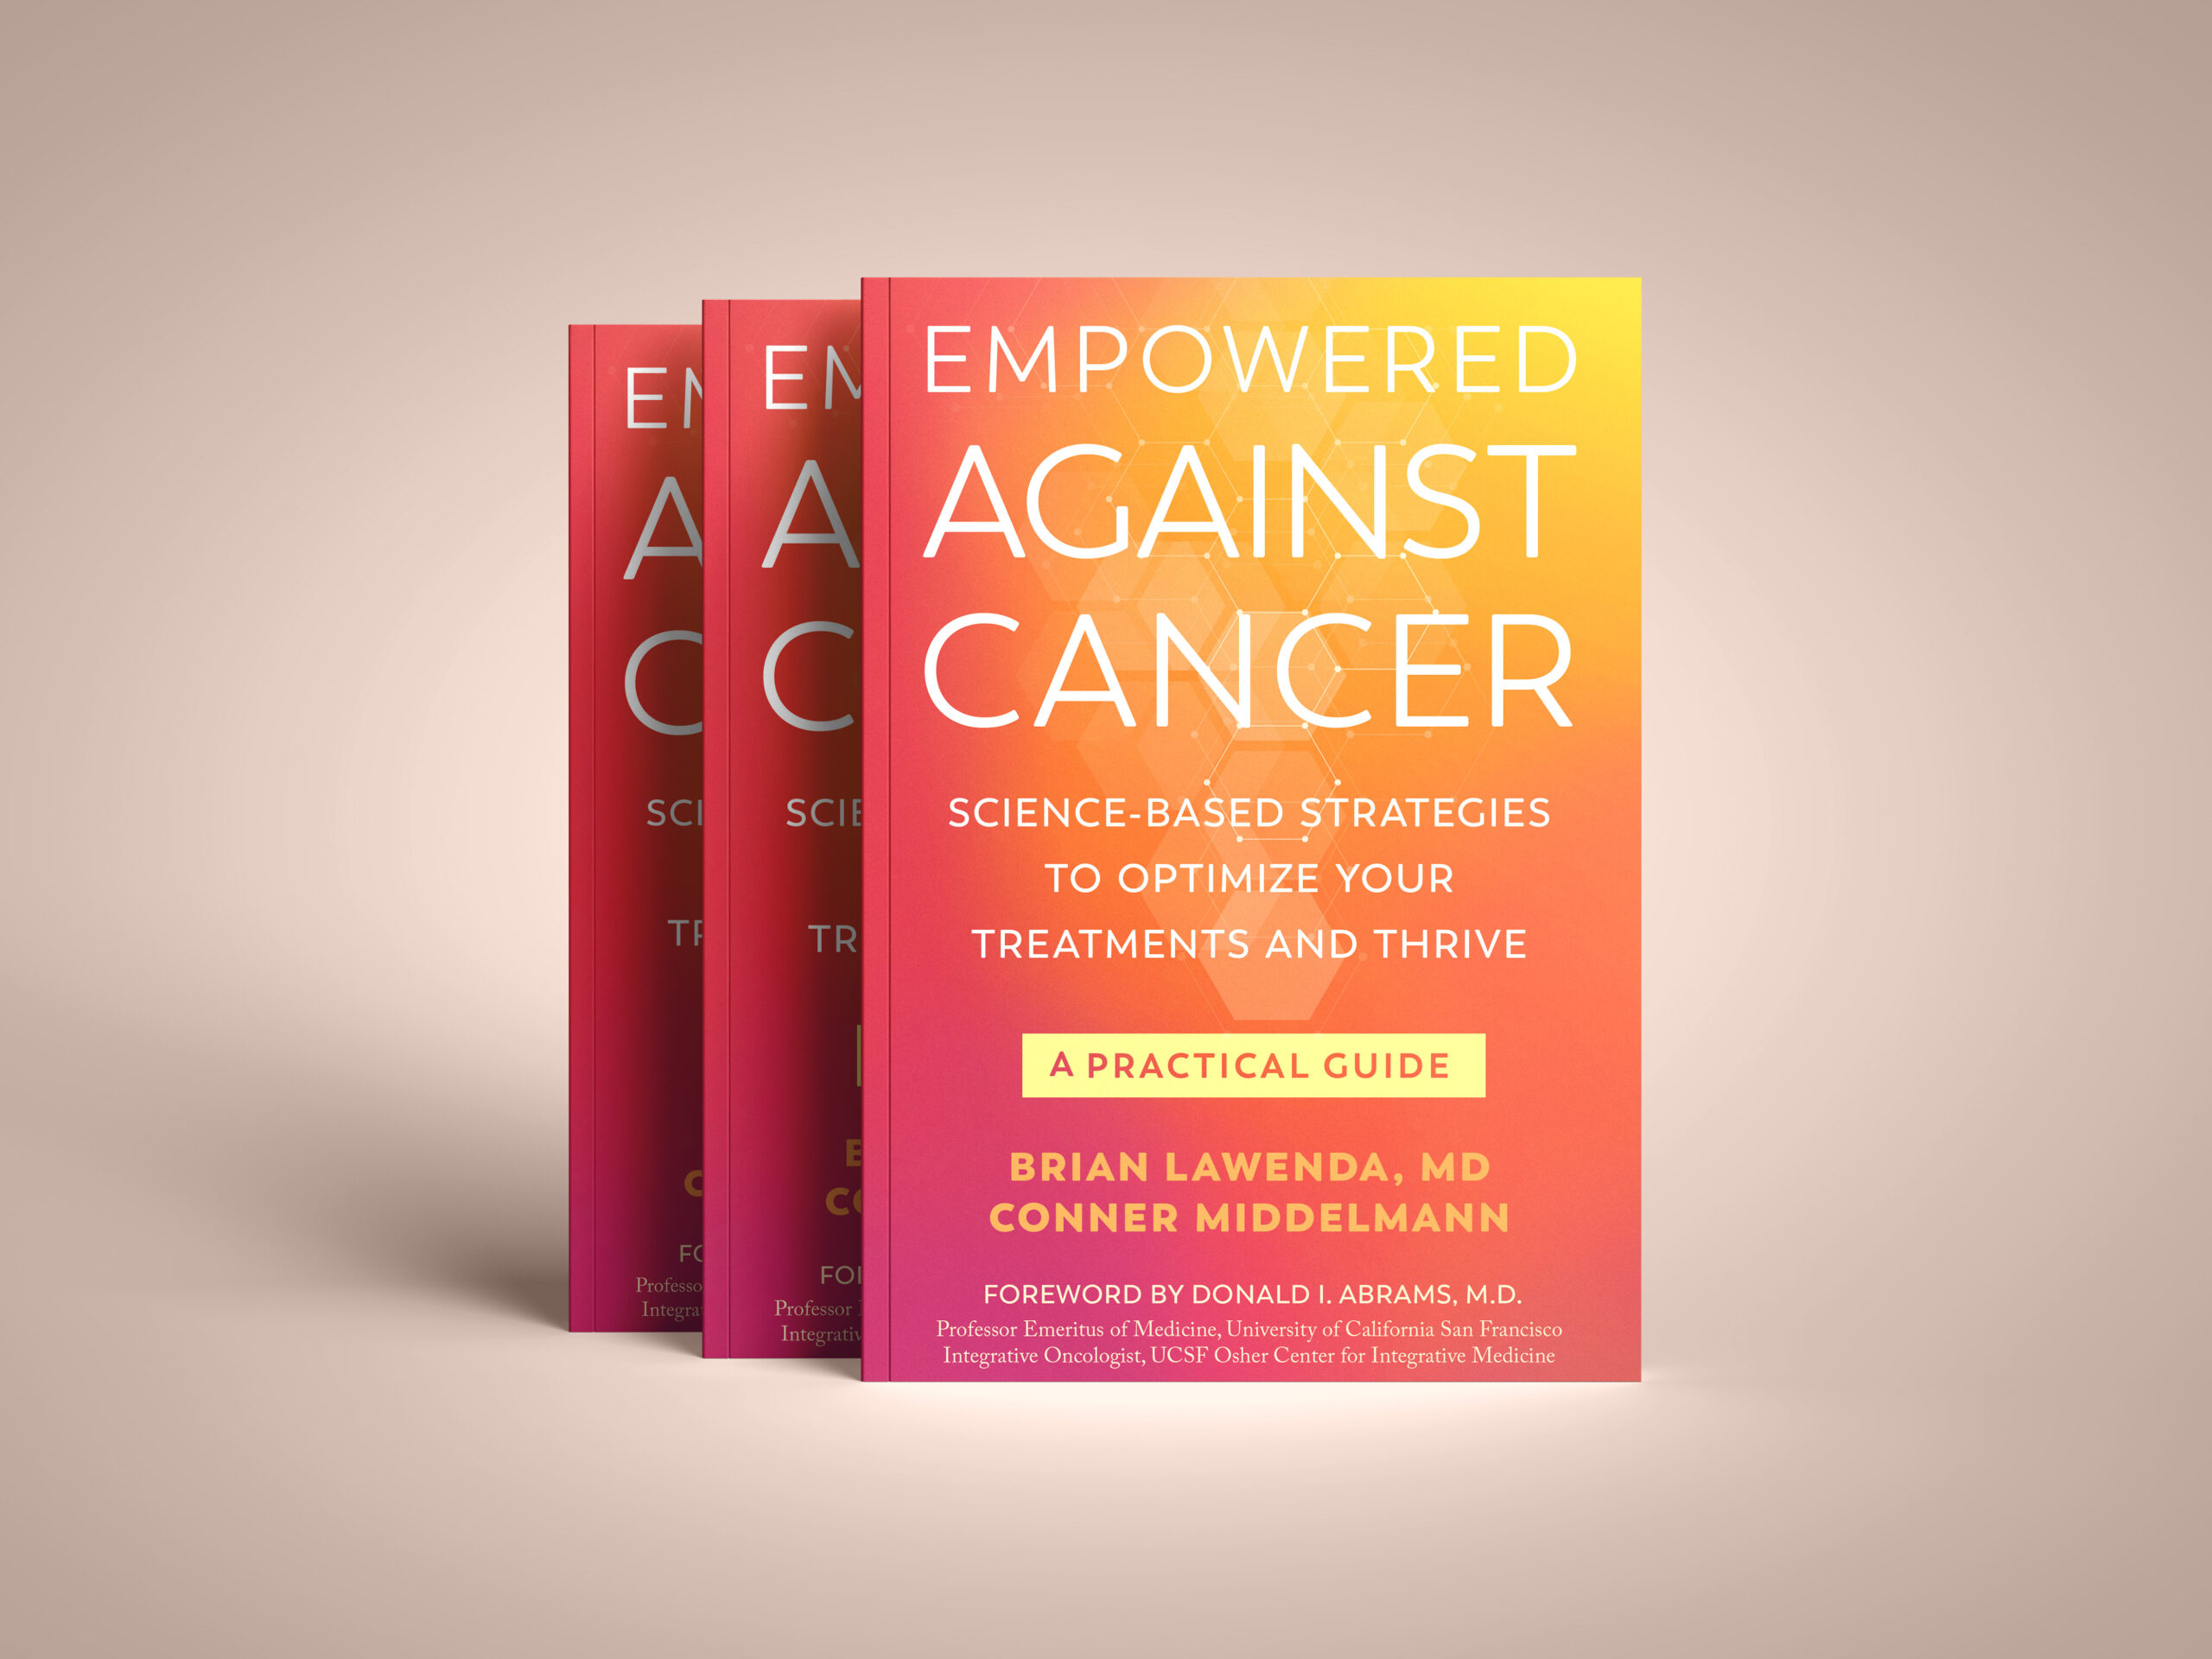 Anti-cancer empowerment